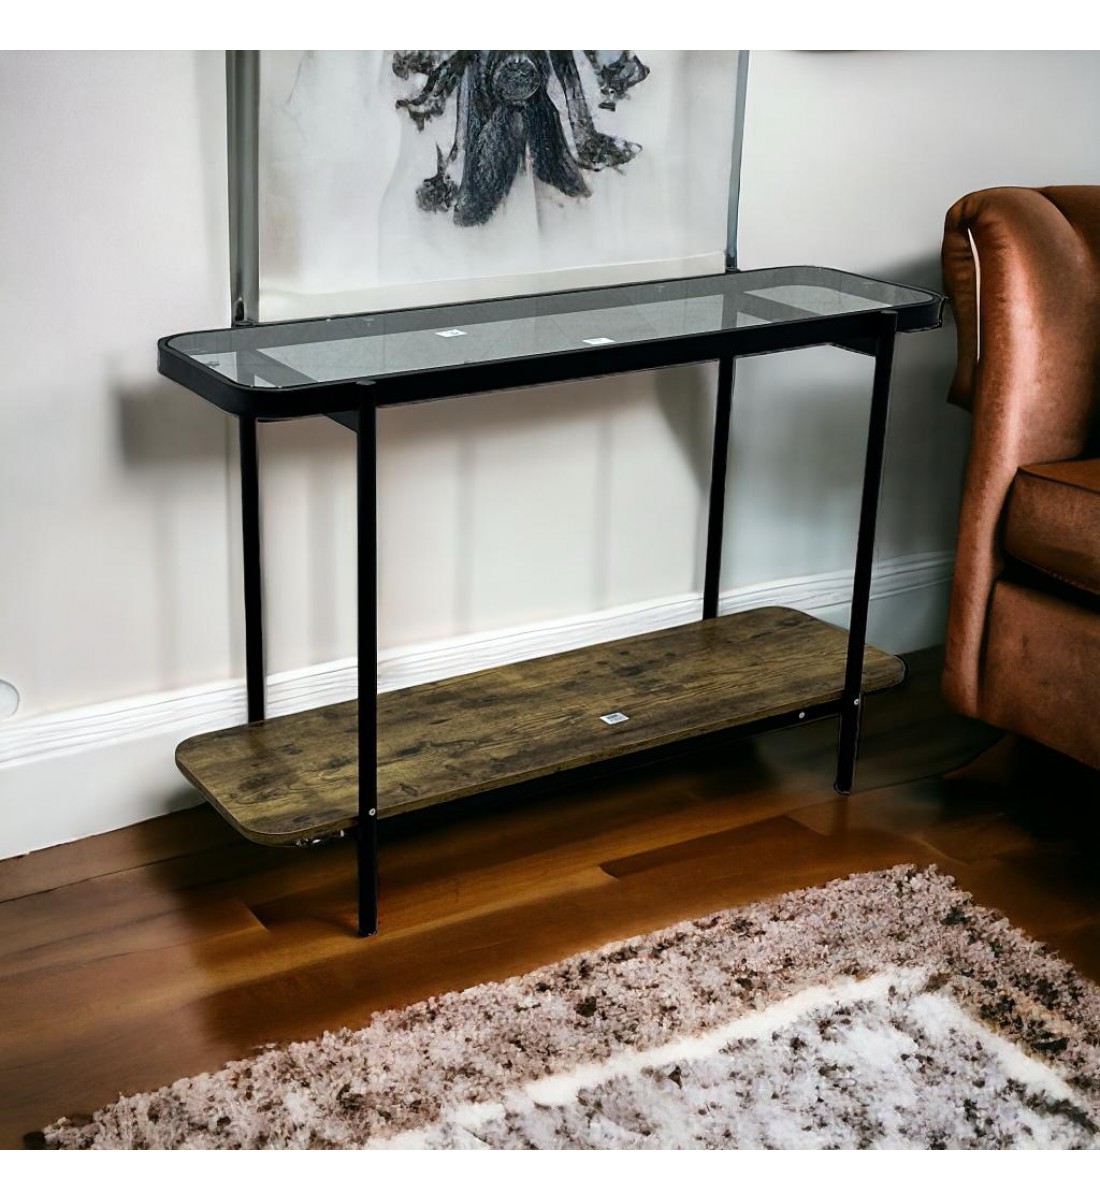 طاولة مدخل معدن و خشب ام دي اف و سطح زجاج خشبي و اسود - 35×120×80 سم